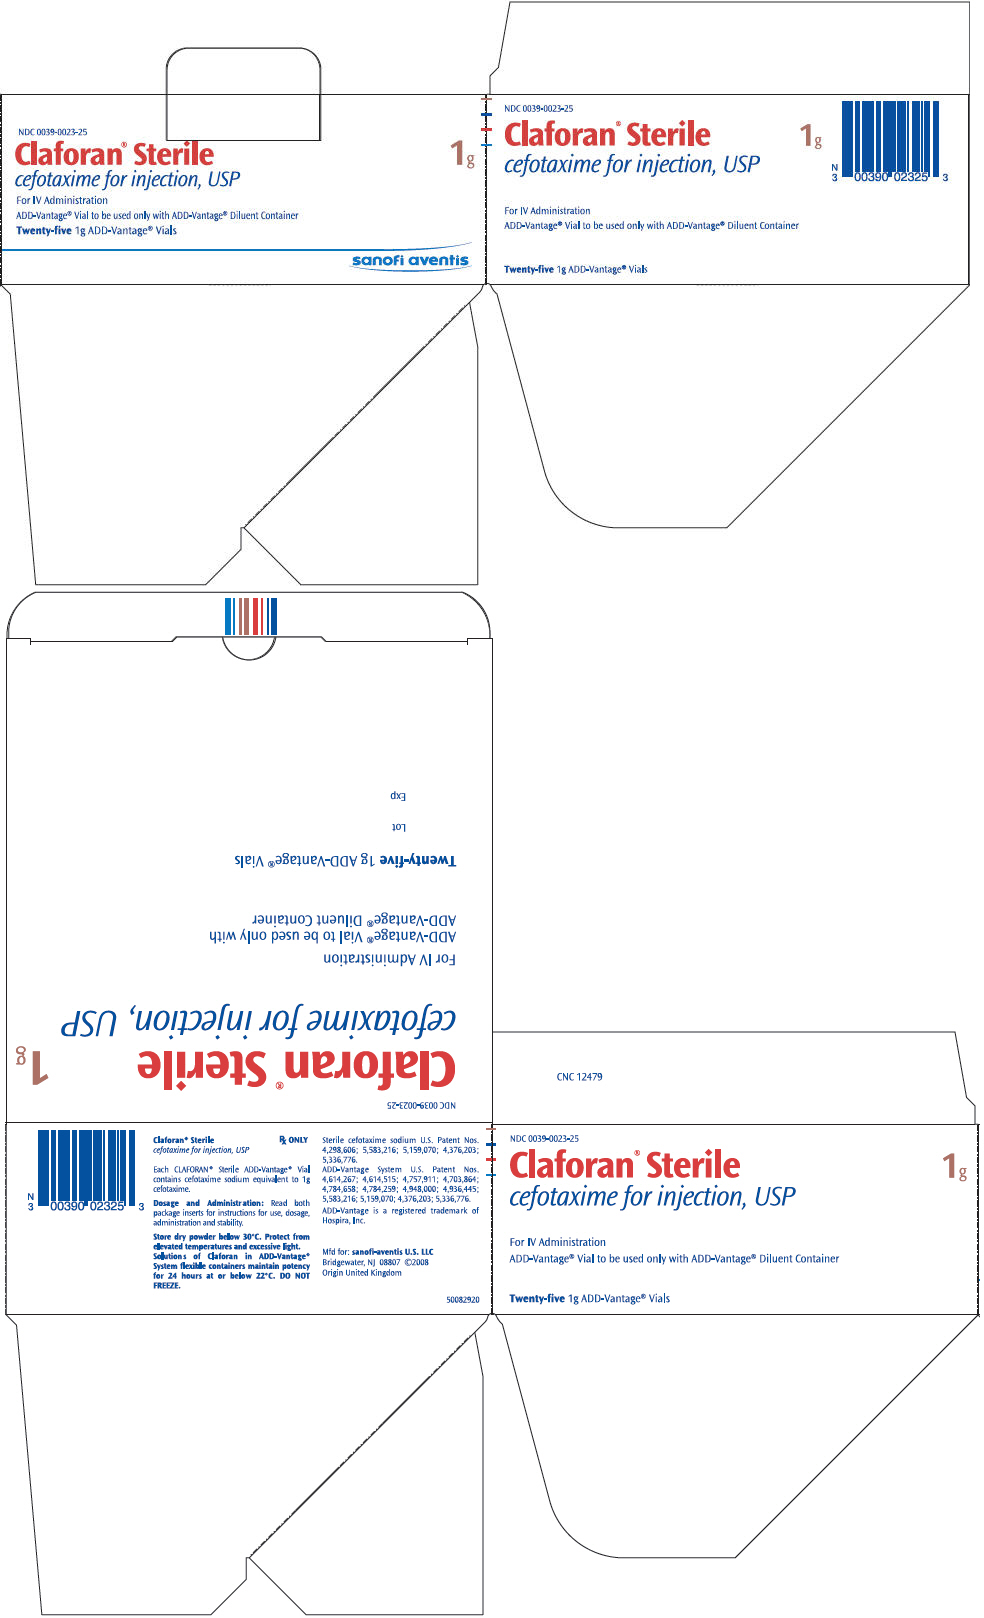 PRINCIPAL DISPLAY PANEL - 1g Add-Vantage Vial Carton